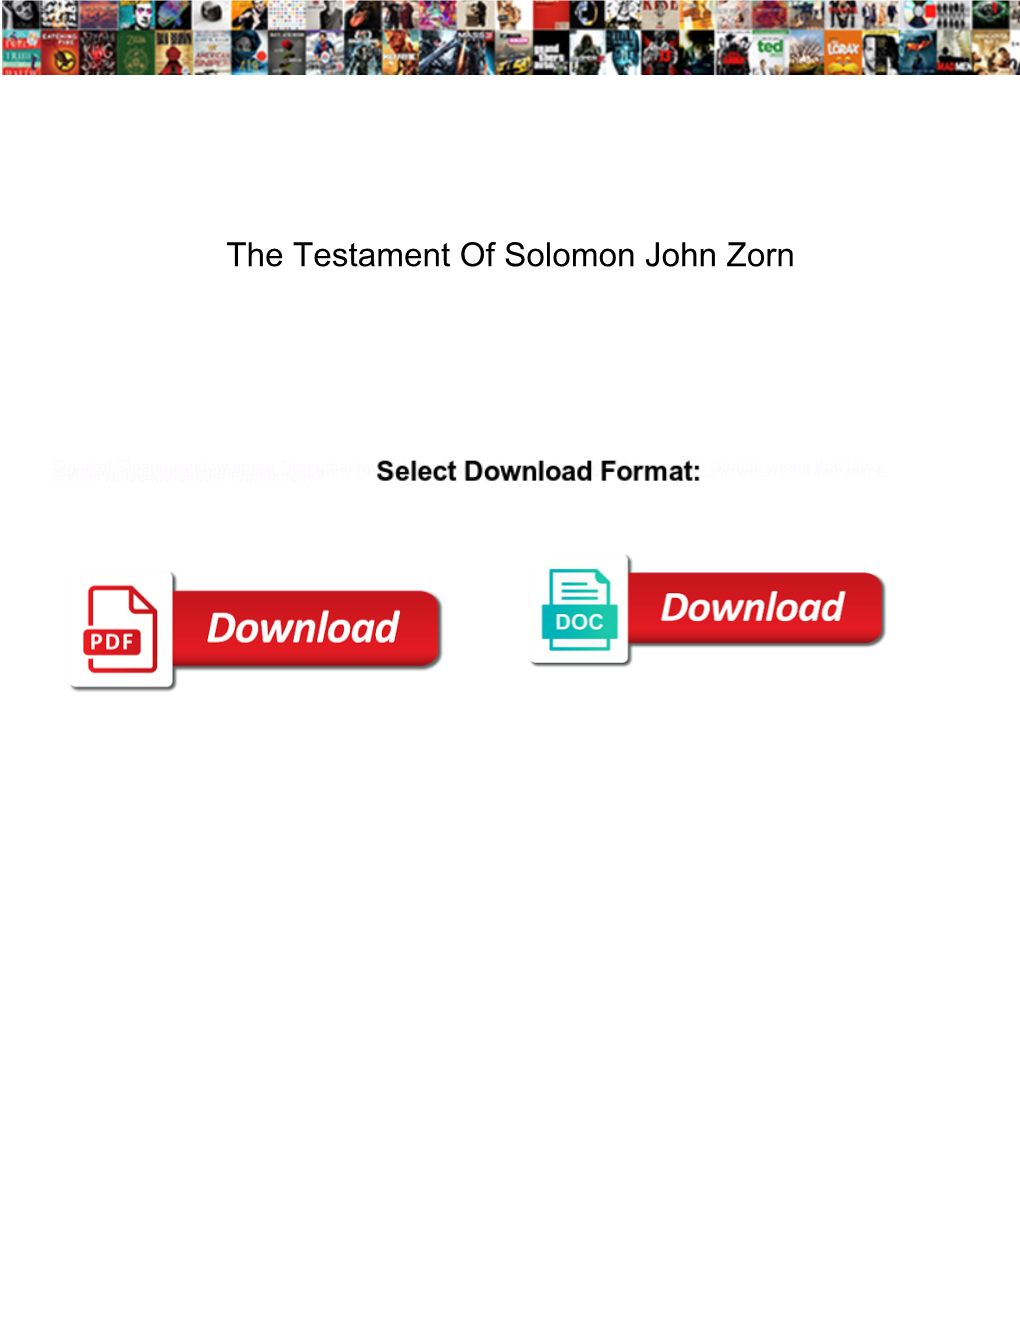 The Testament of Solomon John Zorn